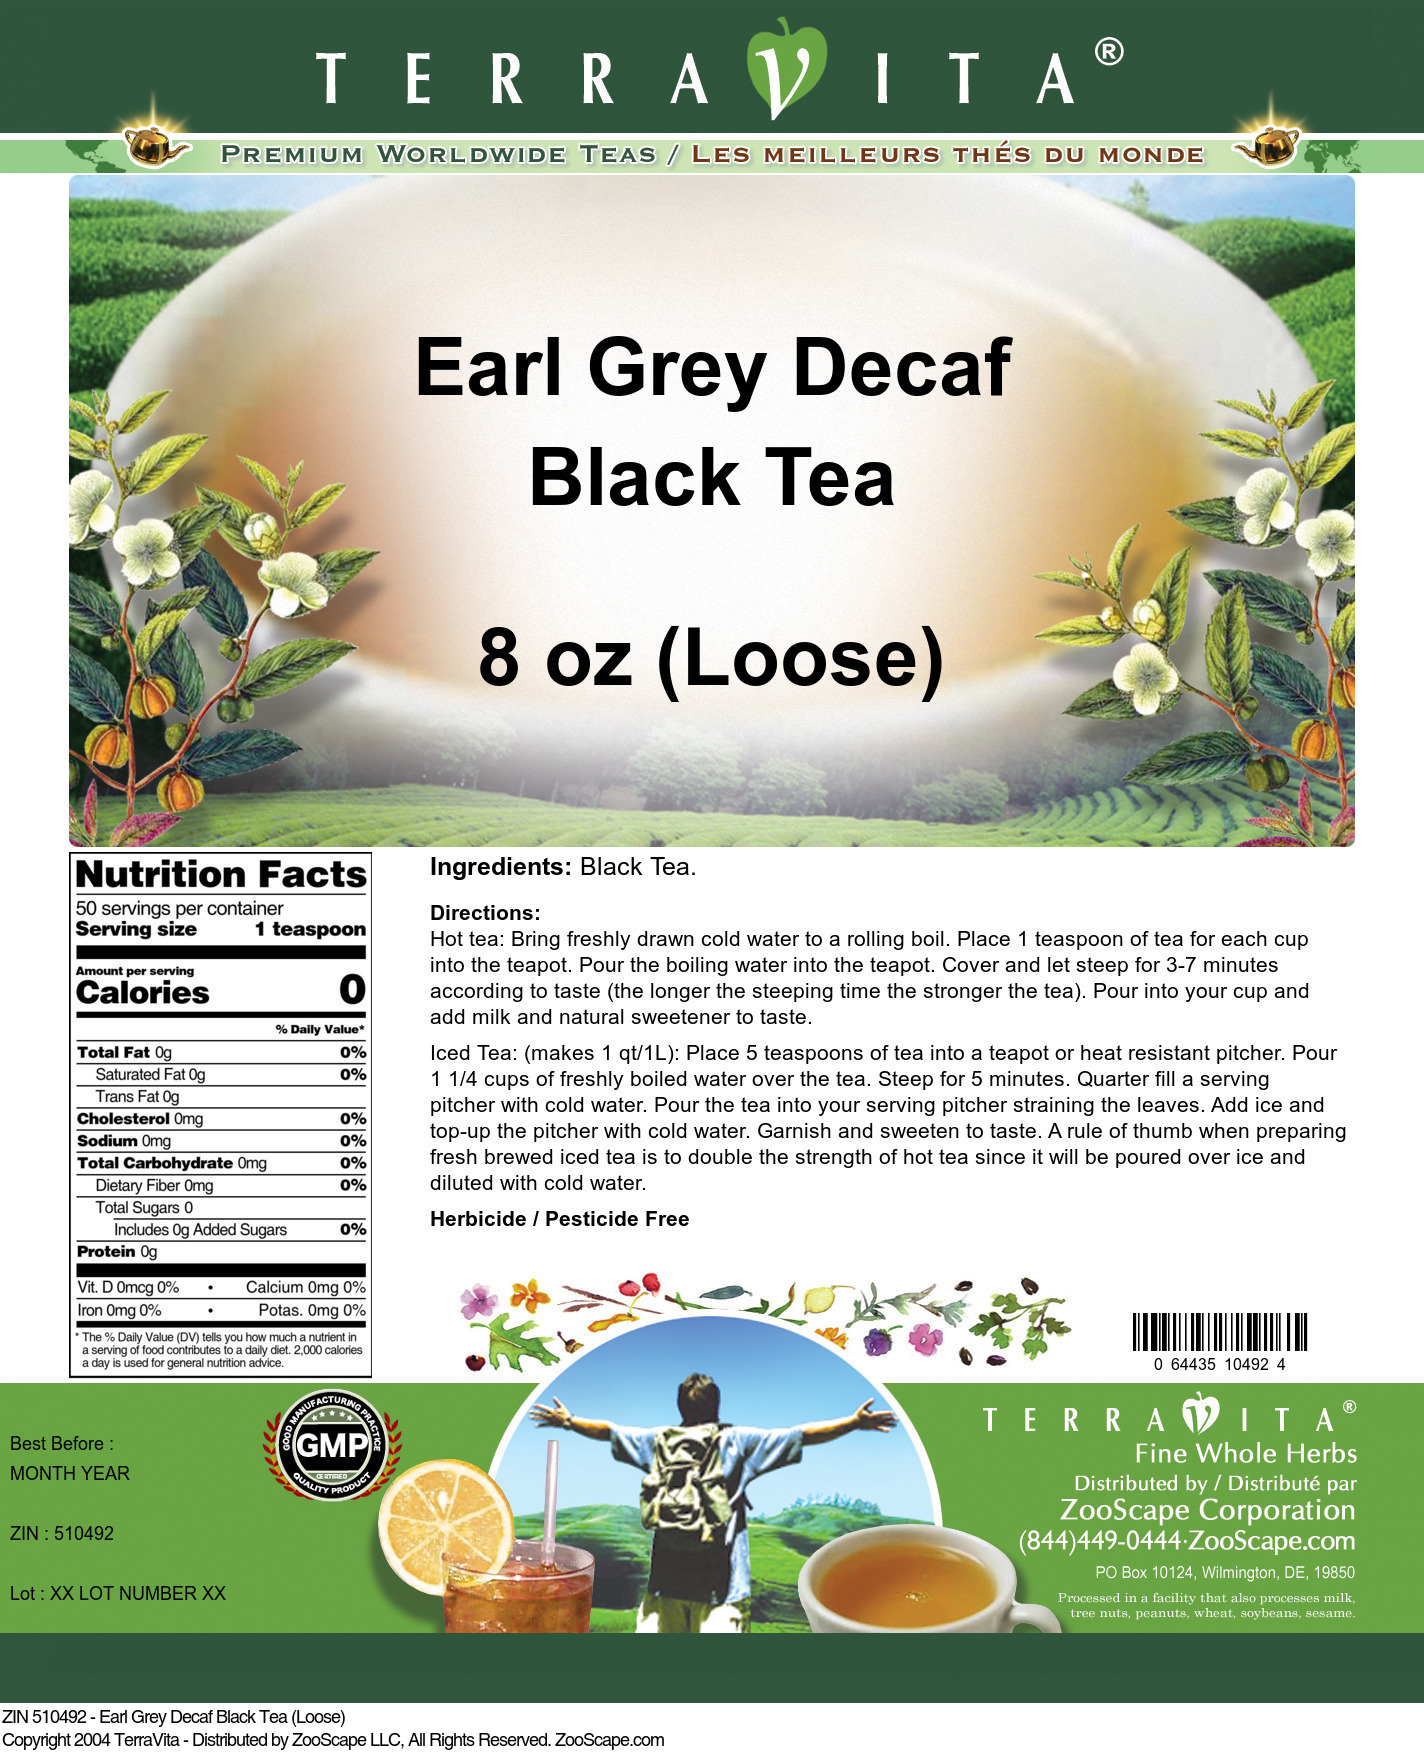 Earl Grey Decaf Black Tea (Loose) - Label